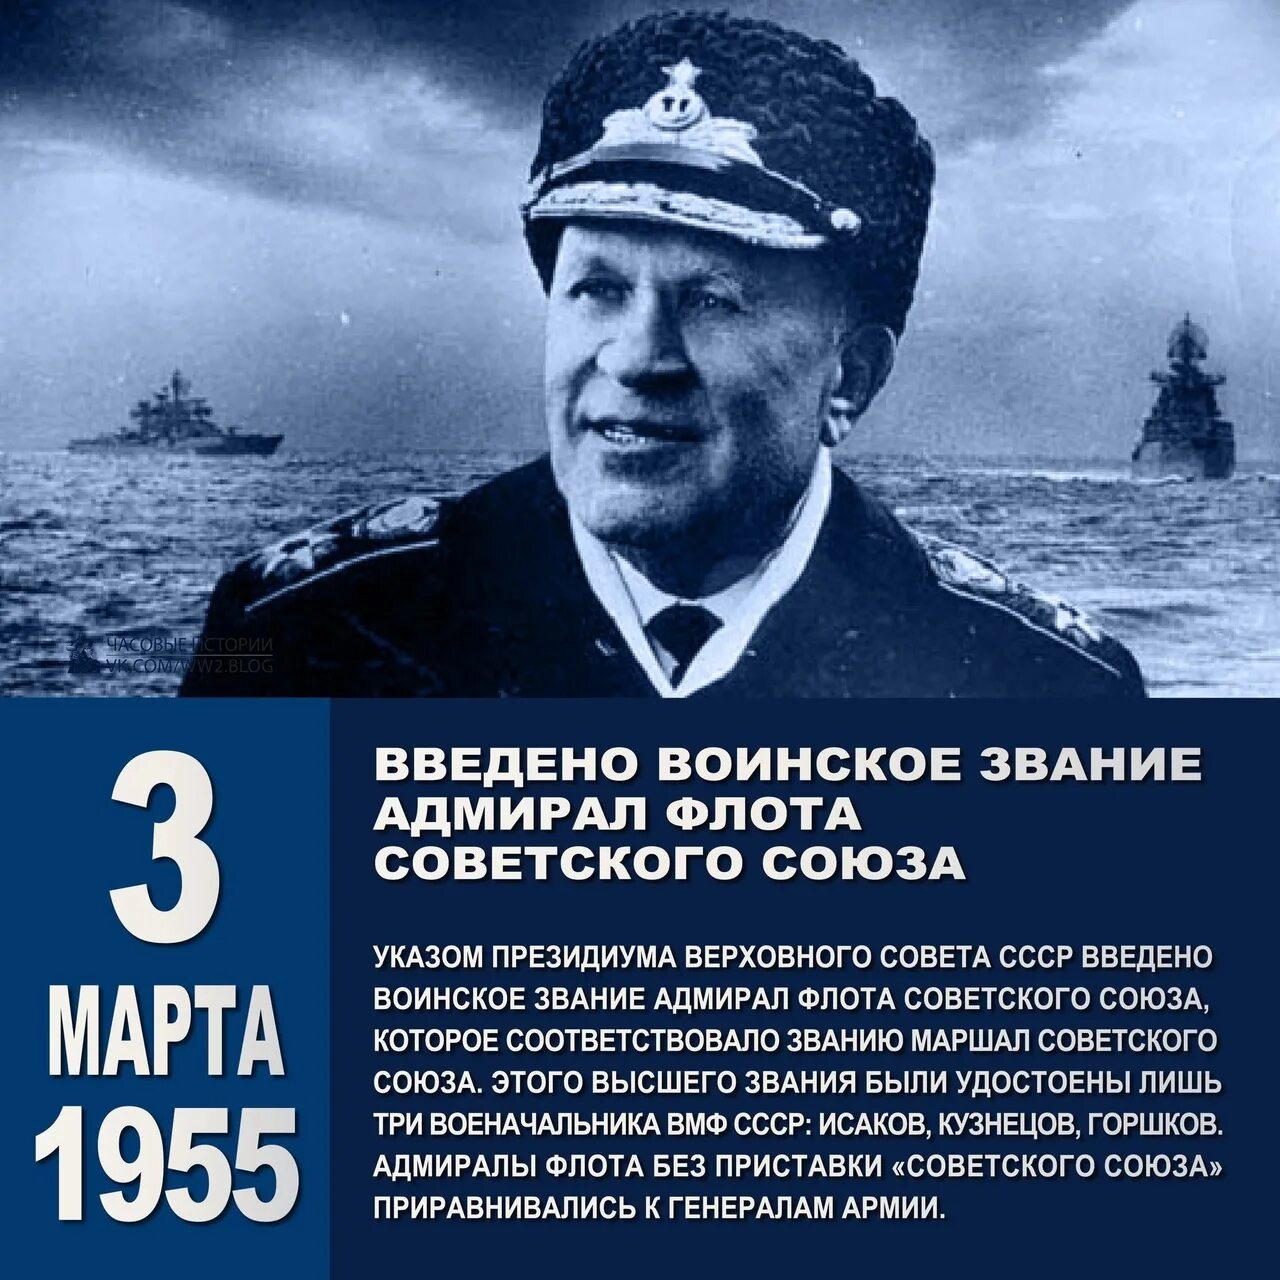 Адмирал чин. Звание Адмирал флота советского Союза. Звание Адмирал флота. Адмирал звания ВМФ. Адмирал воинское звание.